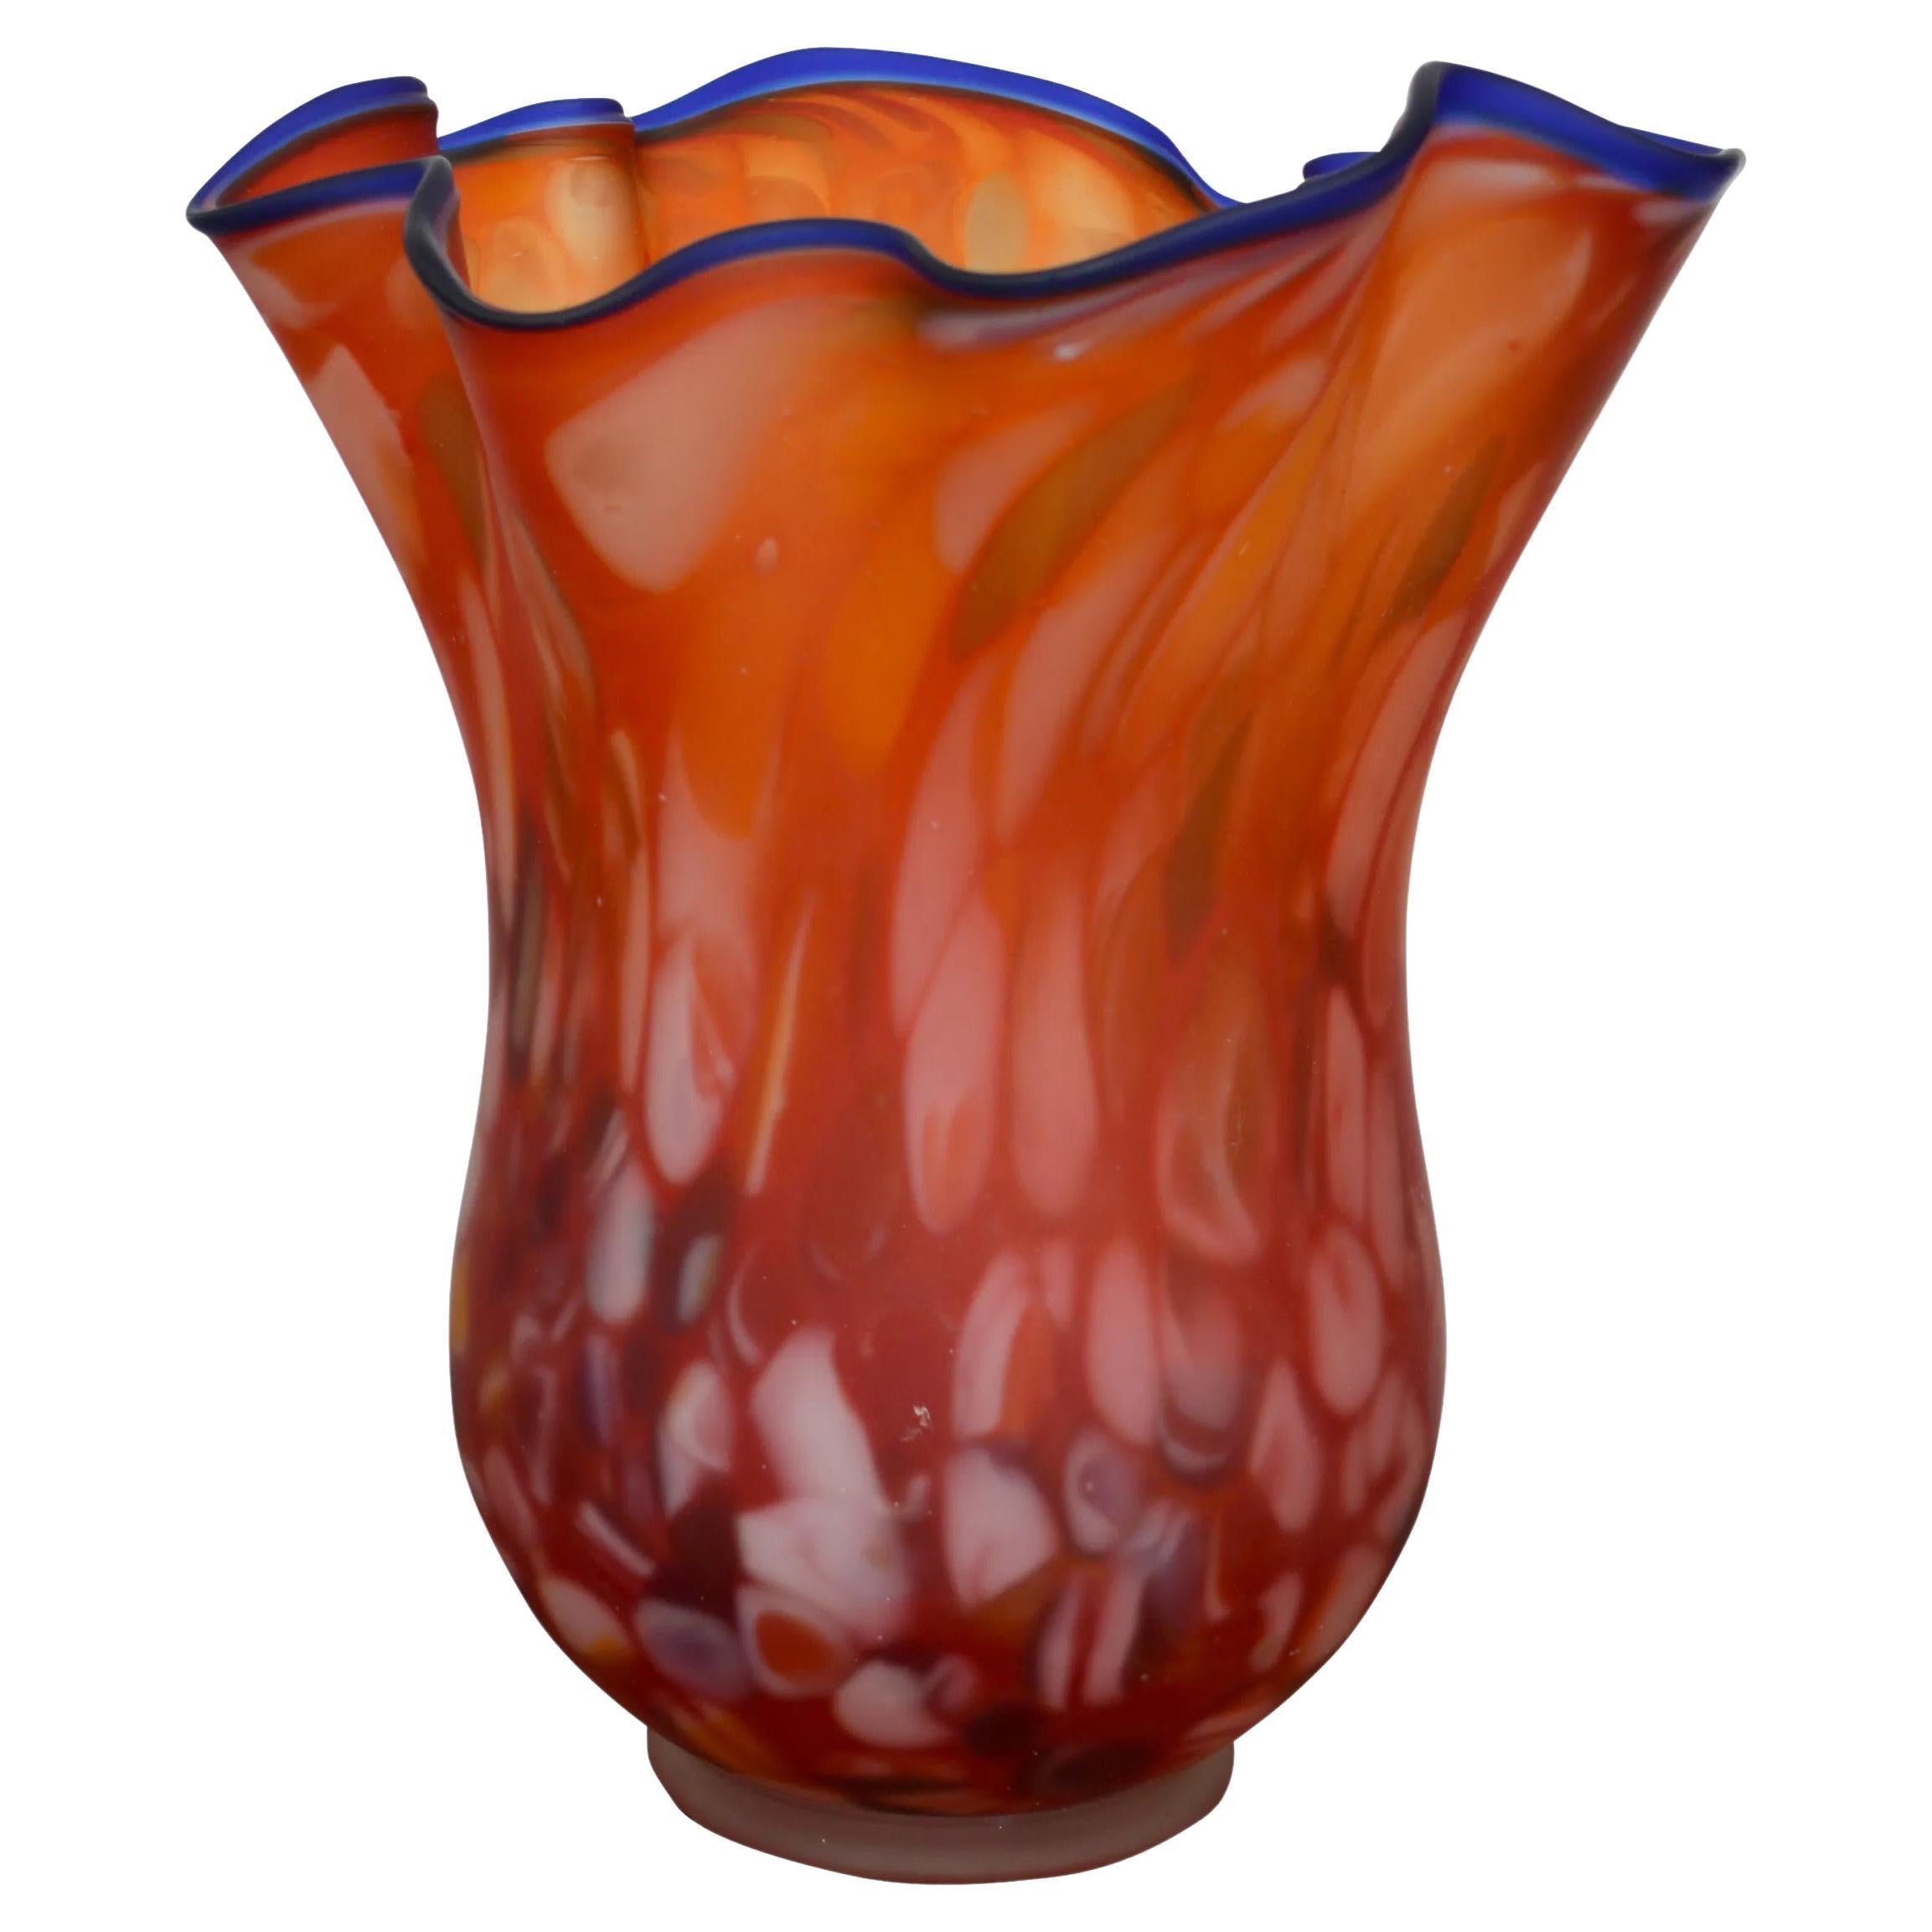 Azerbaijanische Vase aus mundgeblasenem Kunstglas